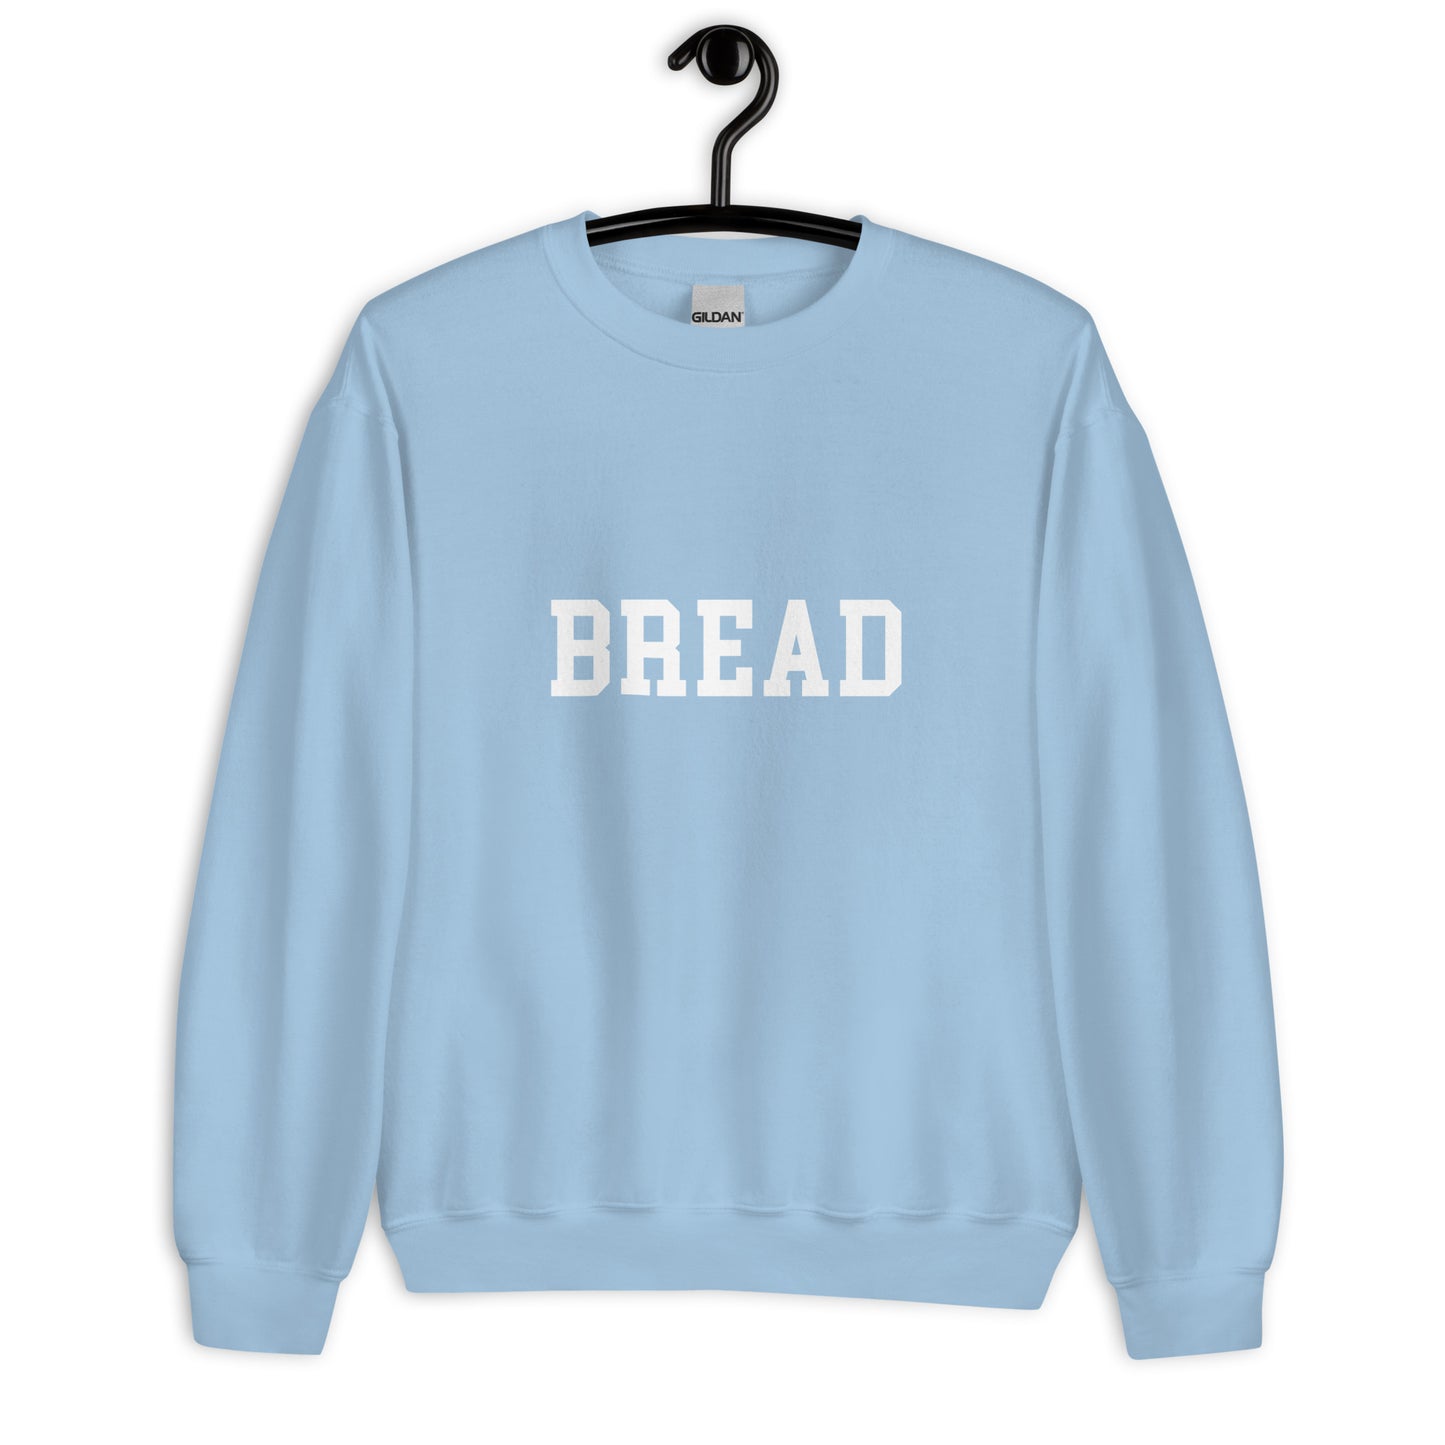 Bread Sweatshirt - Straight Font